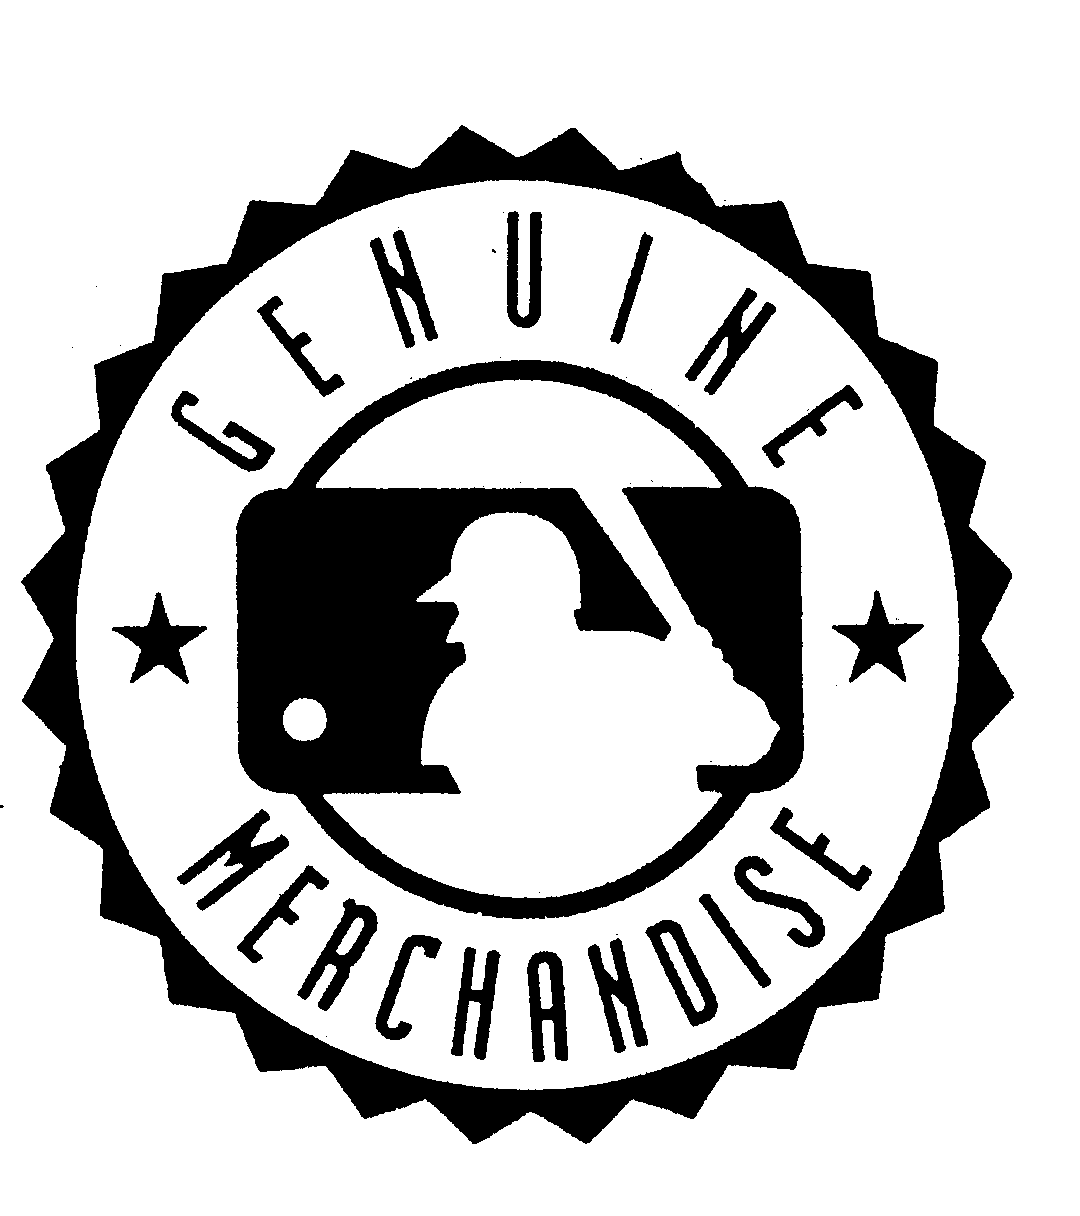 GENUINE MERCHANDISE - Major League Baseball Properties, Inc. Trademark  Registration